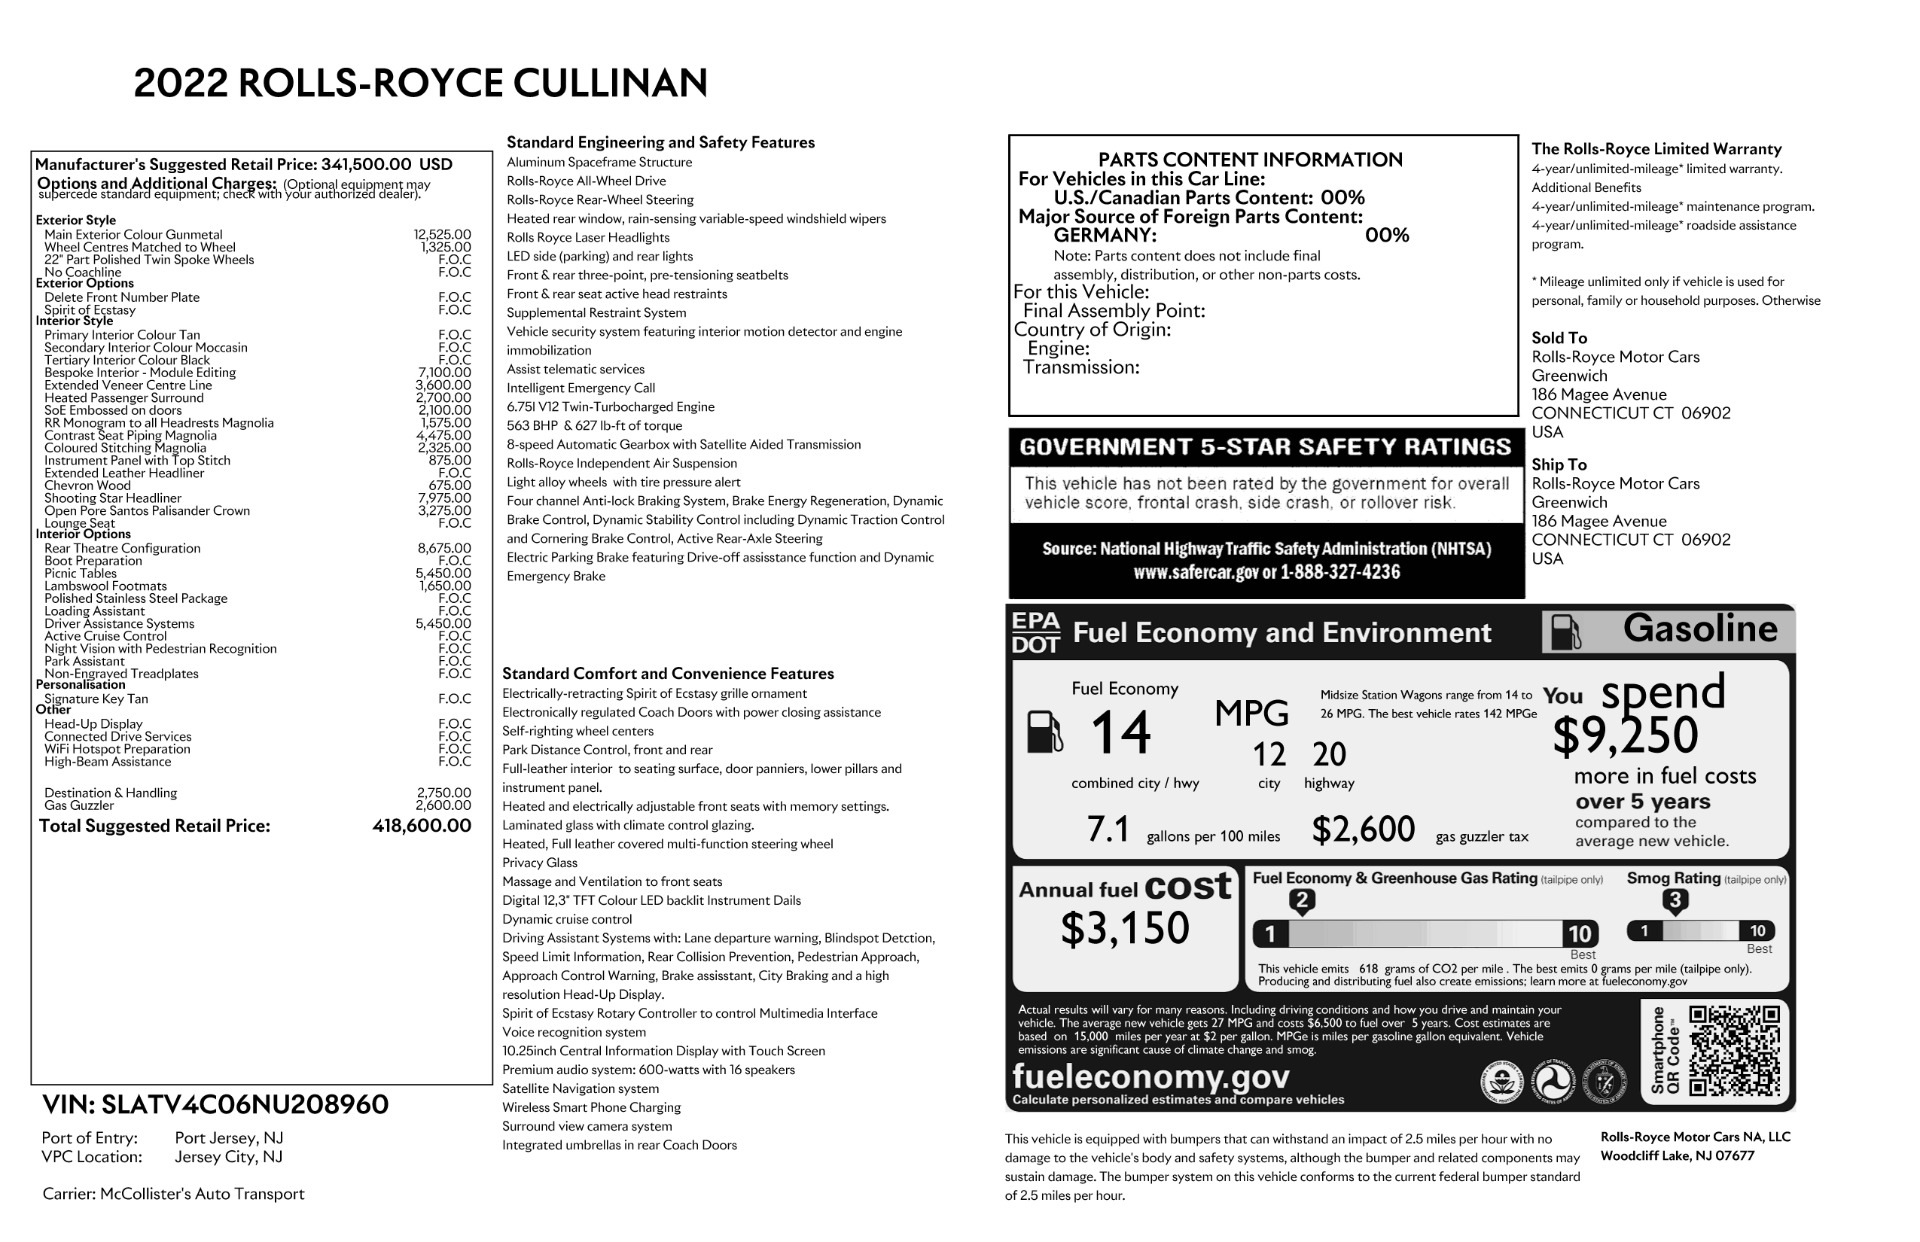 New-2022-Rolls-Royce-Cullinan